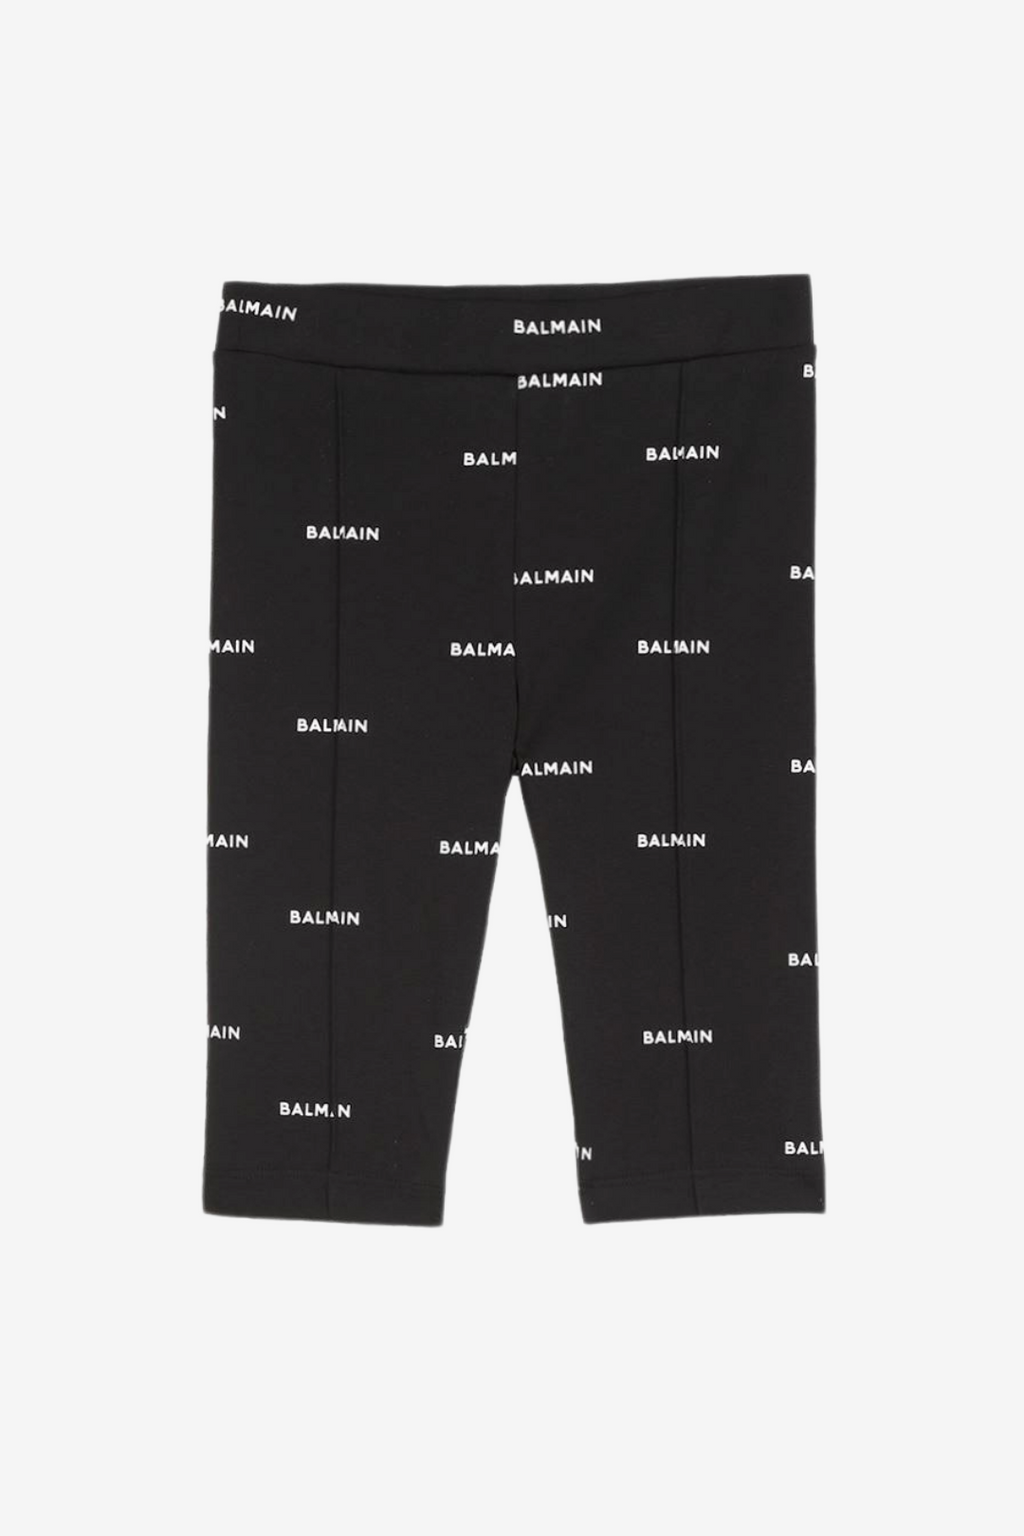 Black cotton leggings with white Balmain logo print – Ballon Rouge